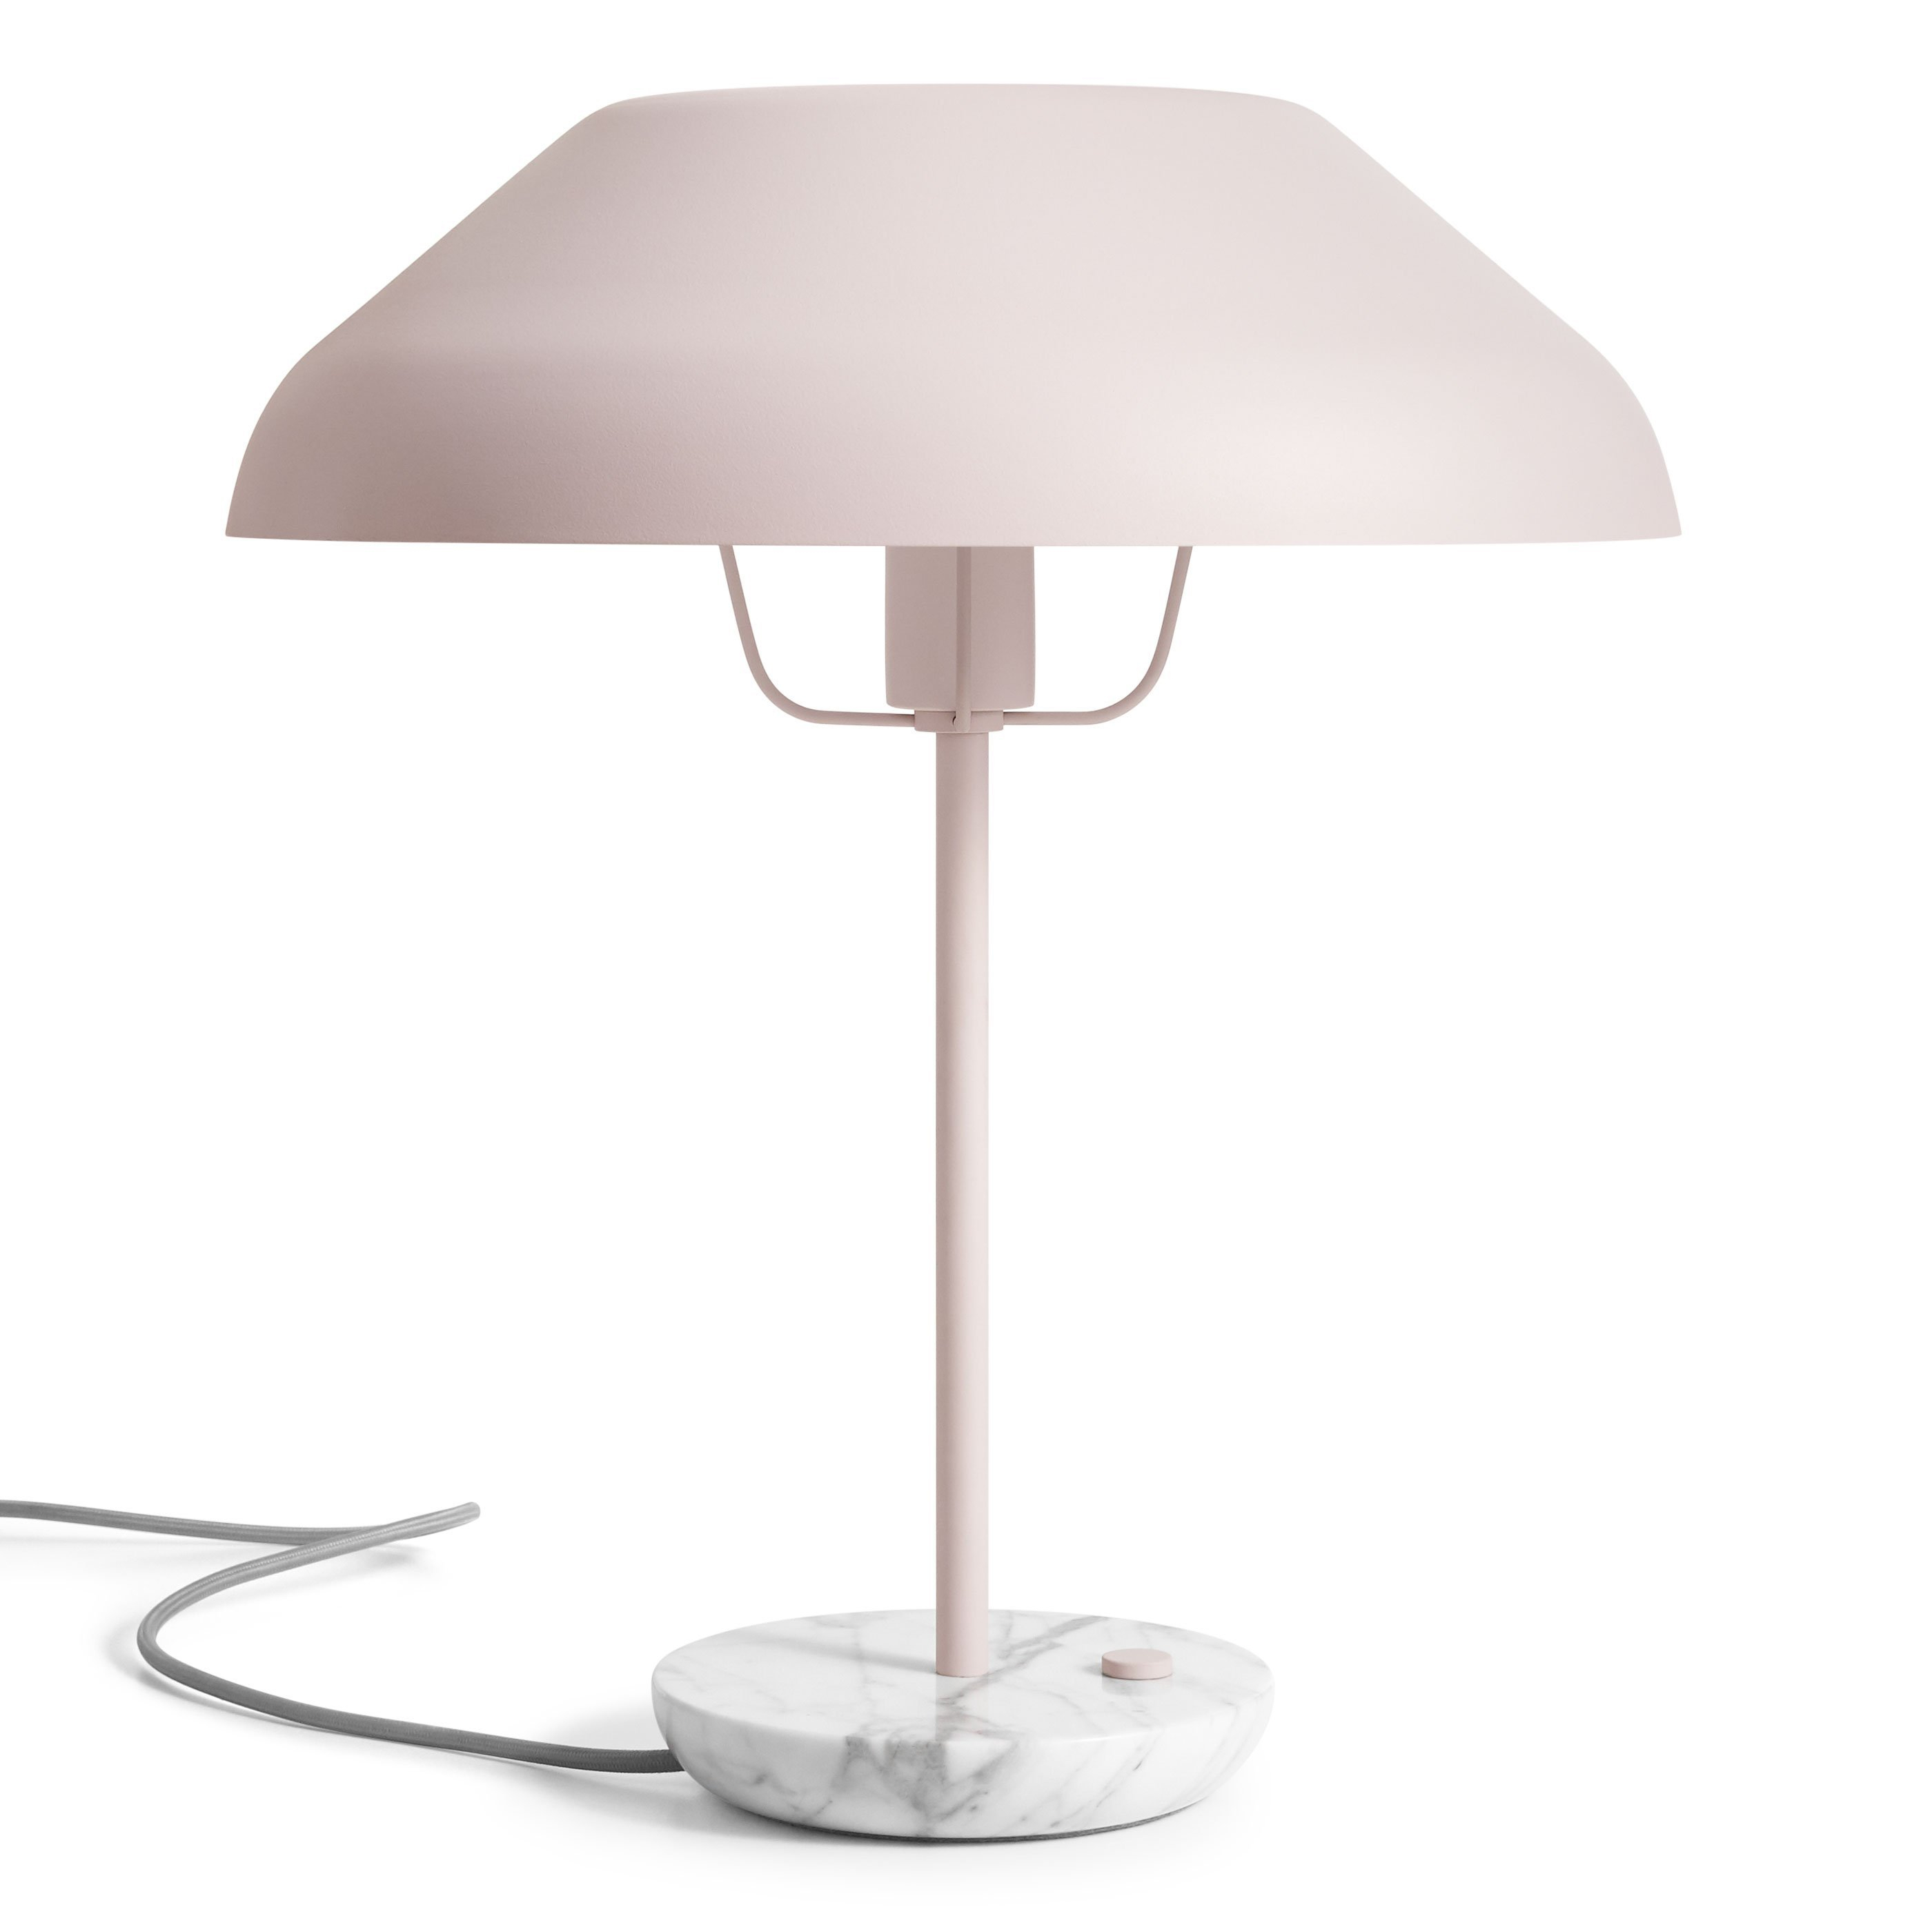 Beau Table Lamp In 2019 Table Lamp Best Desk Lamp in measurements 2800 X 2800